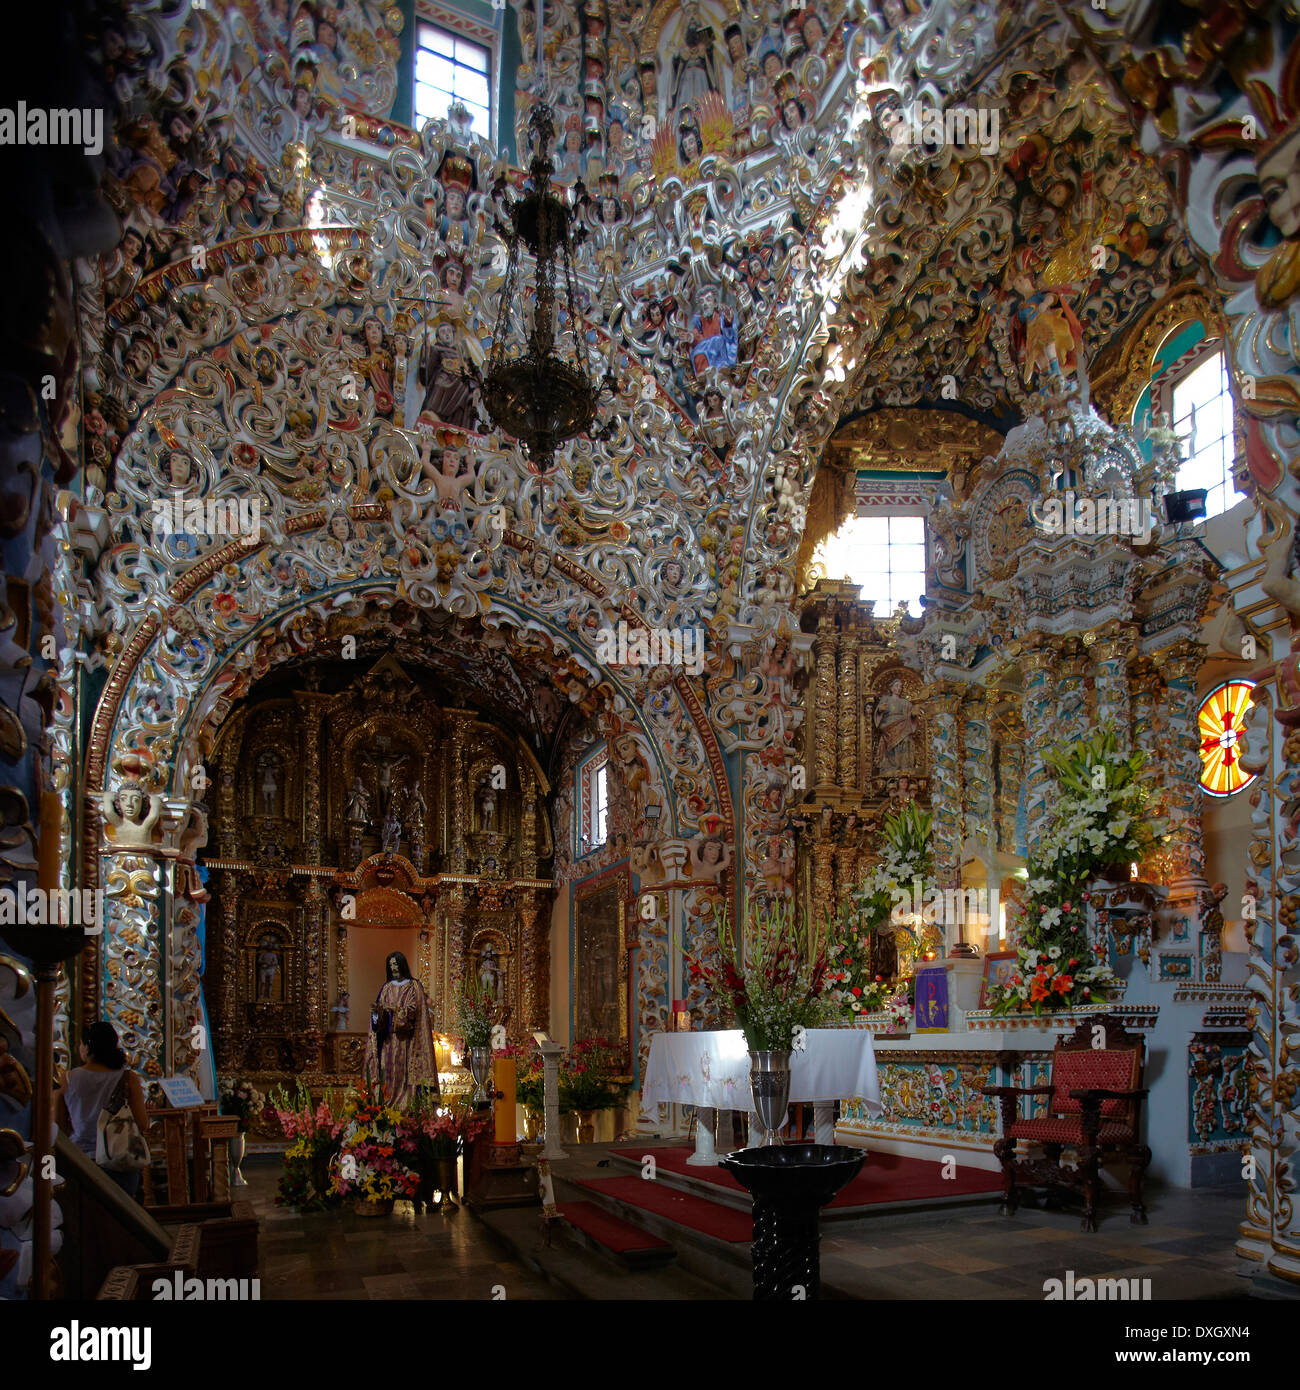 América, Mexico, Puebla state, Tonantzintla village, Santa María church inside Stock Photo